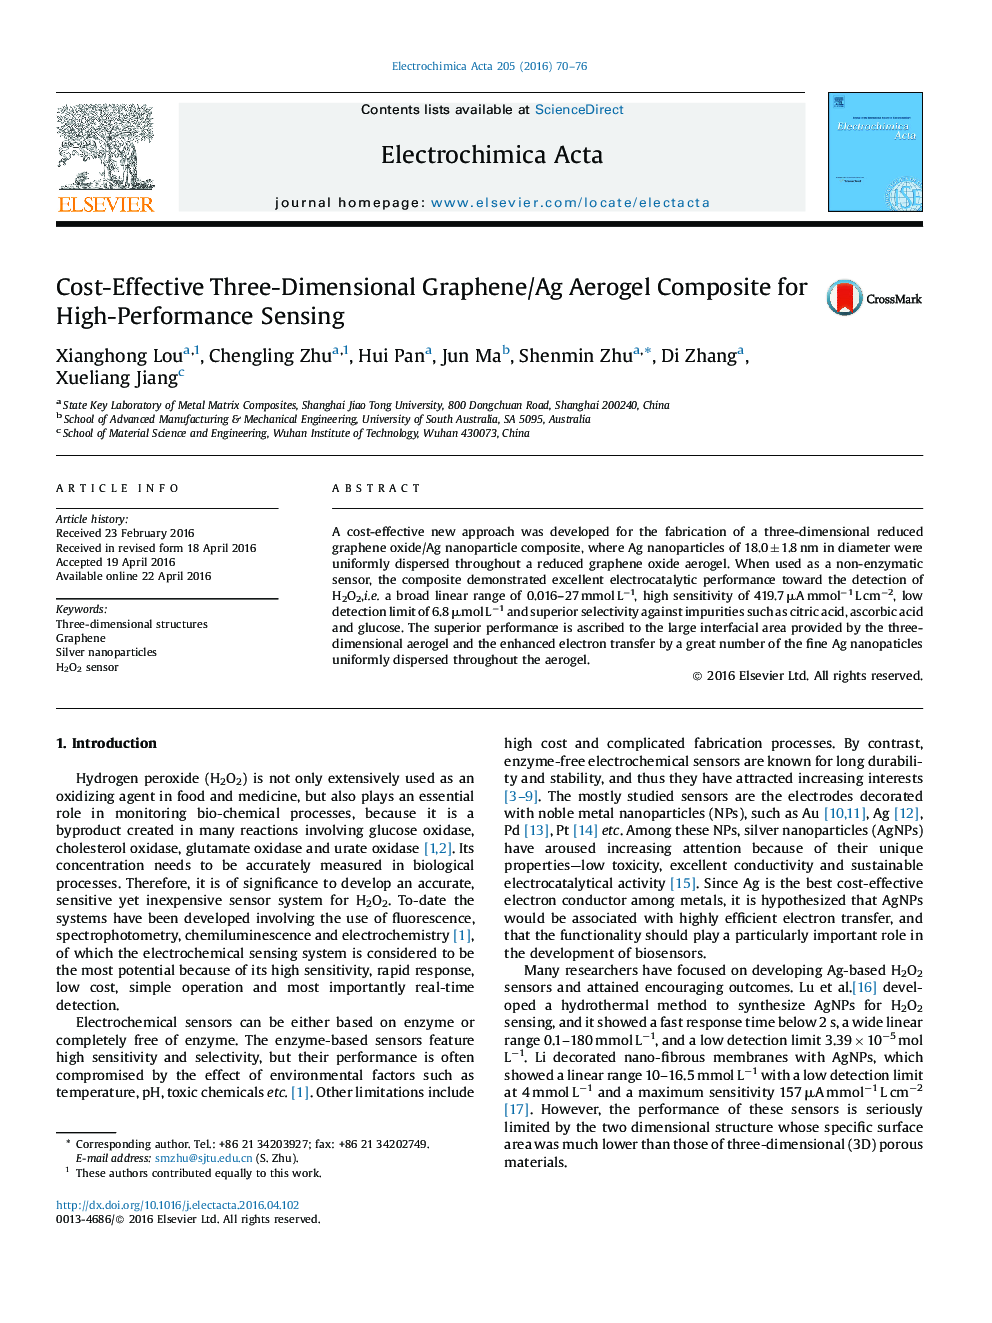 Cost-Effective Three-Dimensional Graphene/Ag Aerogel Composite for High-Performance Sensing